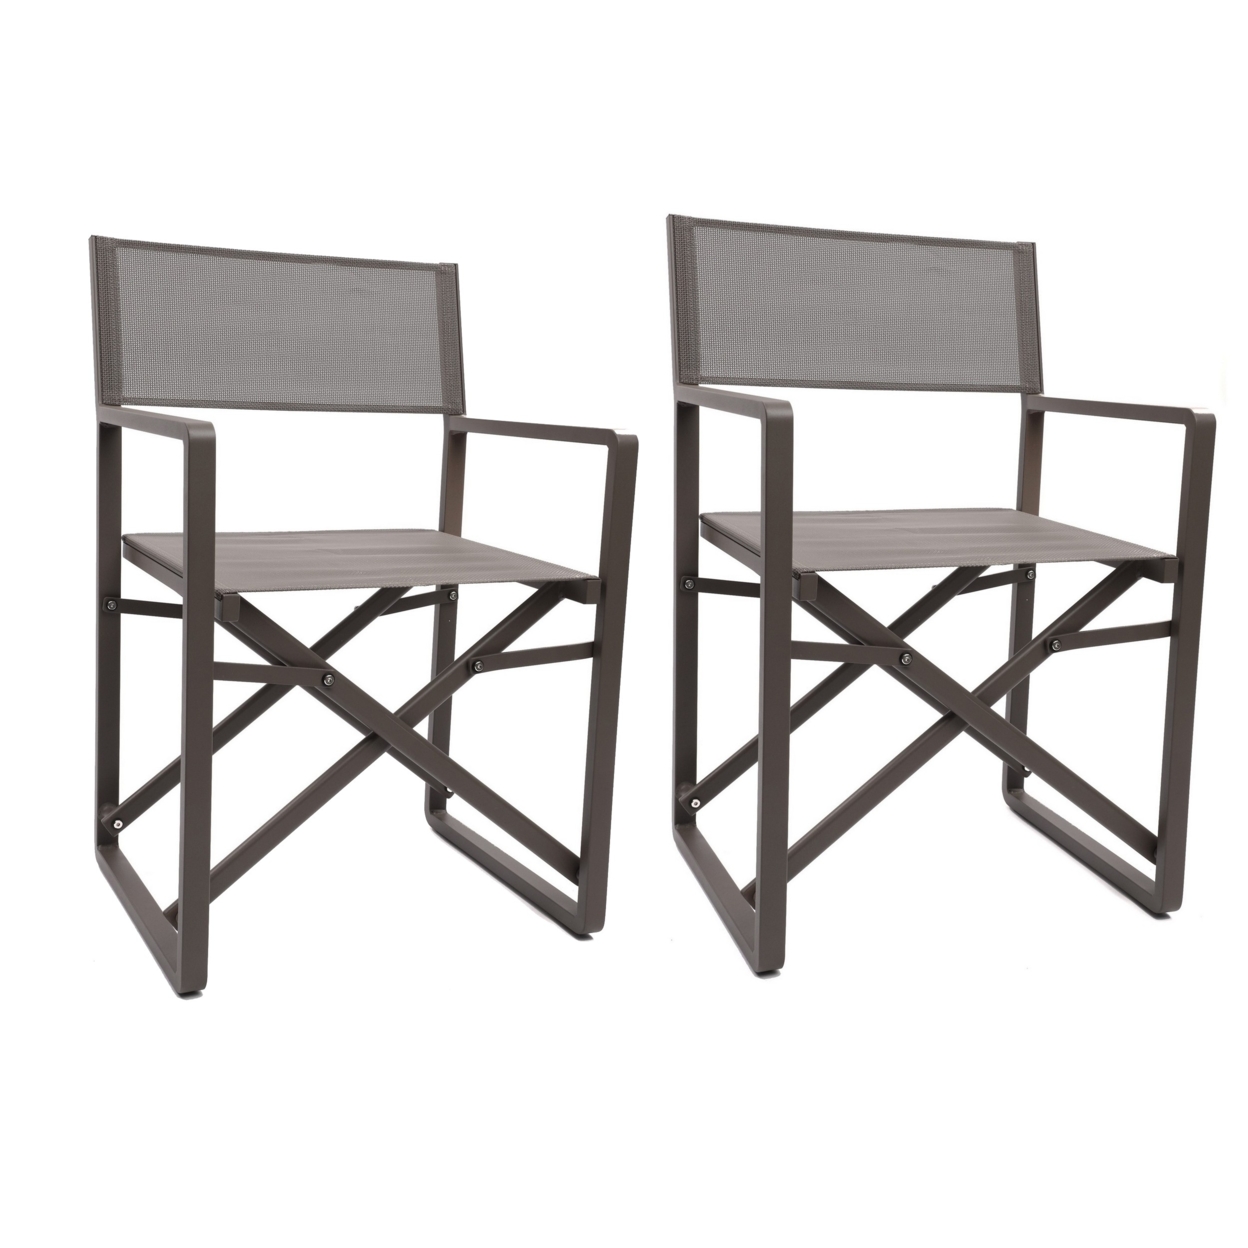 Metal Director Chair With X Shaped Braces, Set Of 2, Espresso Brown- Saltoro Sherpi